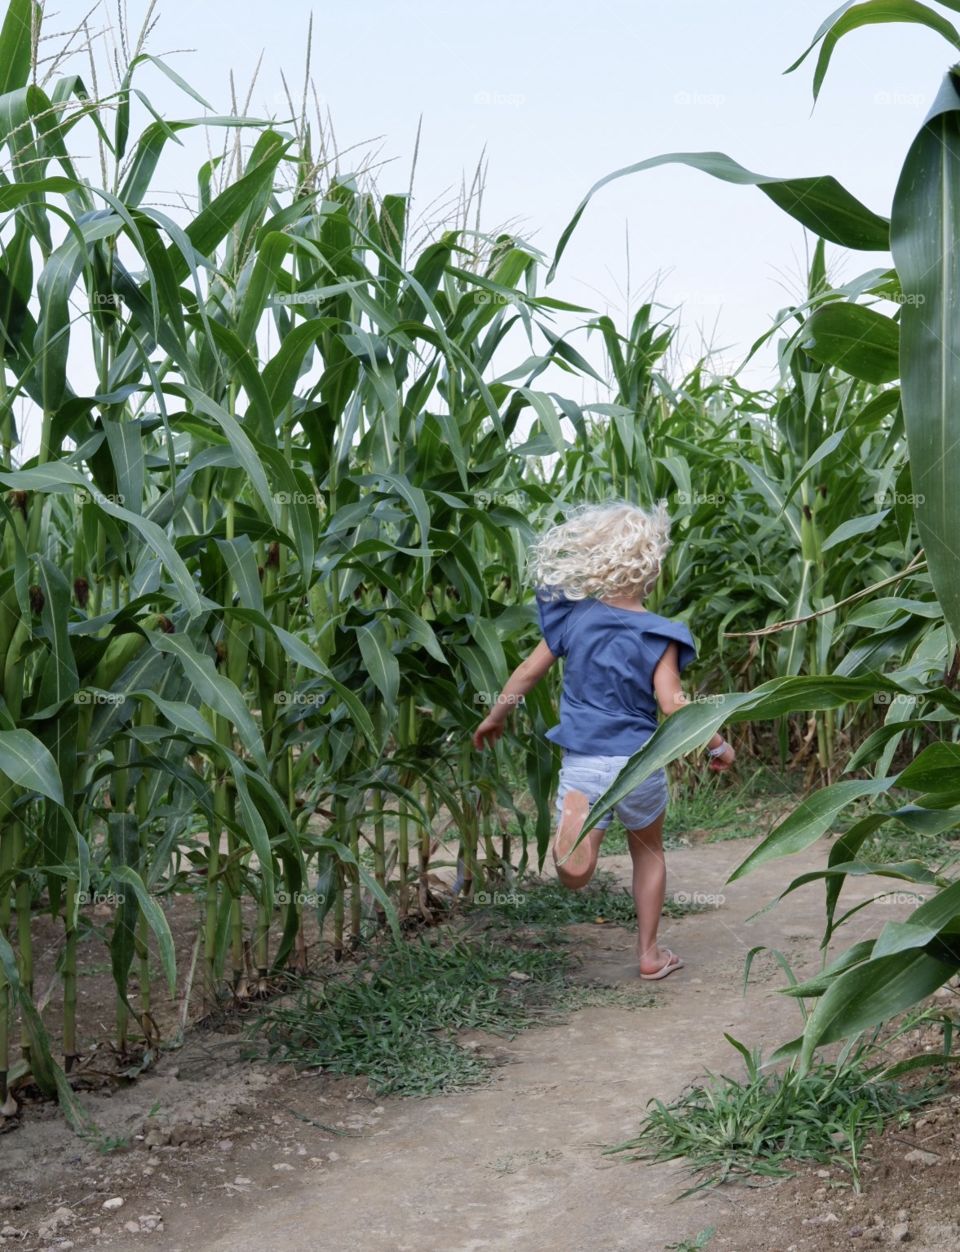 Running through the corn fields